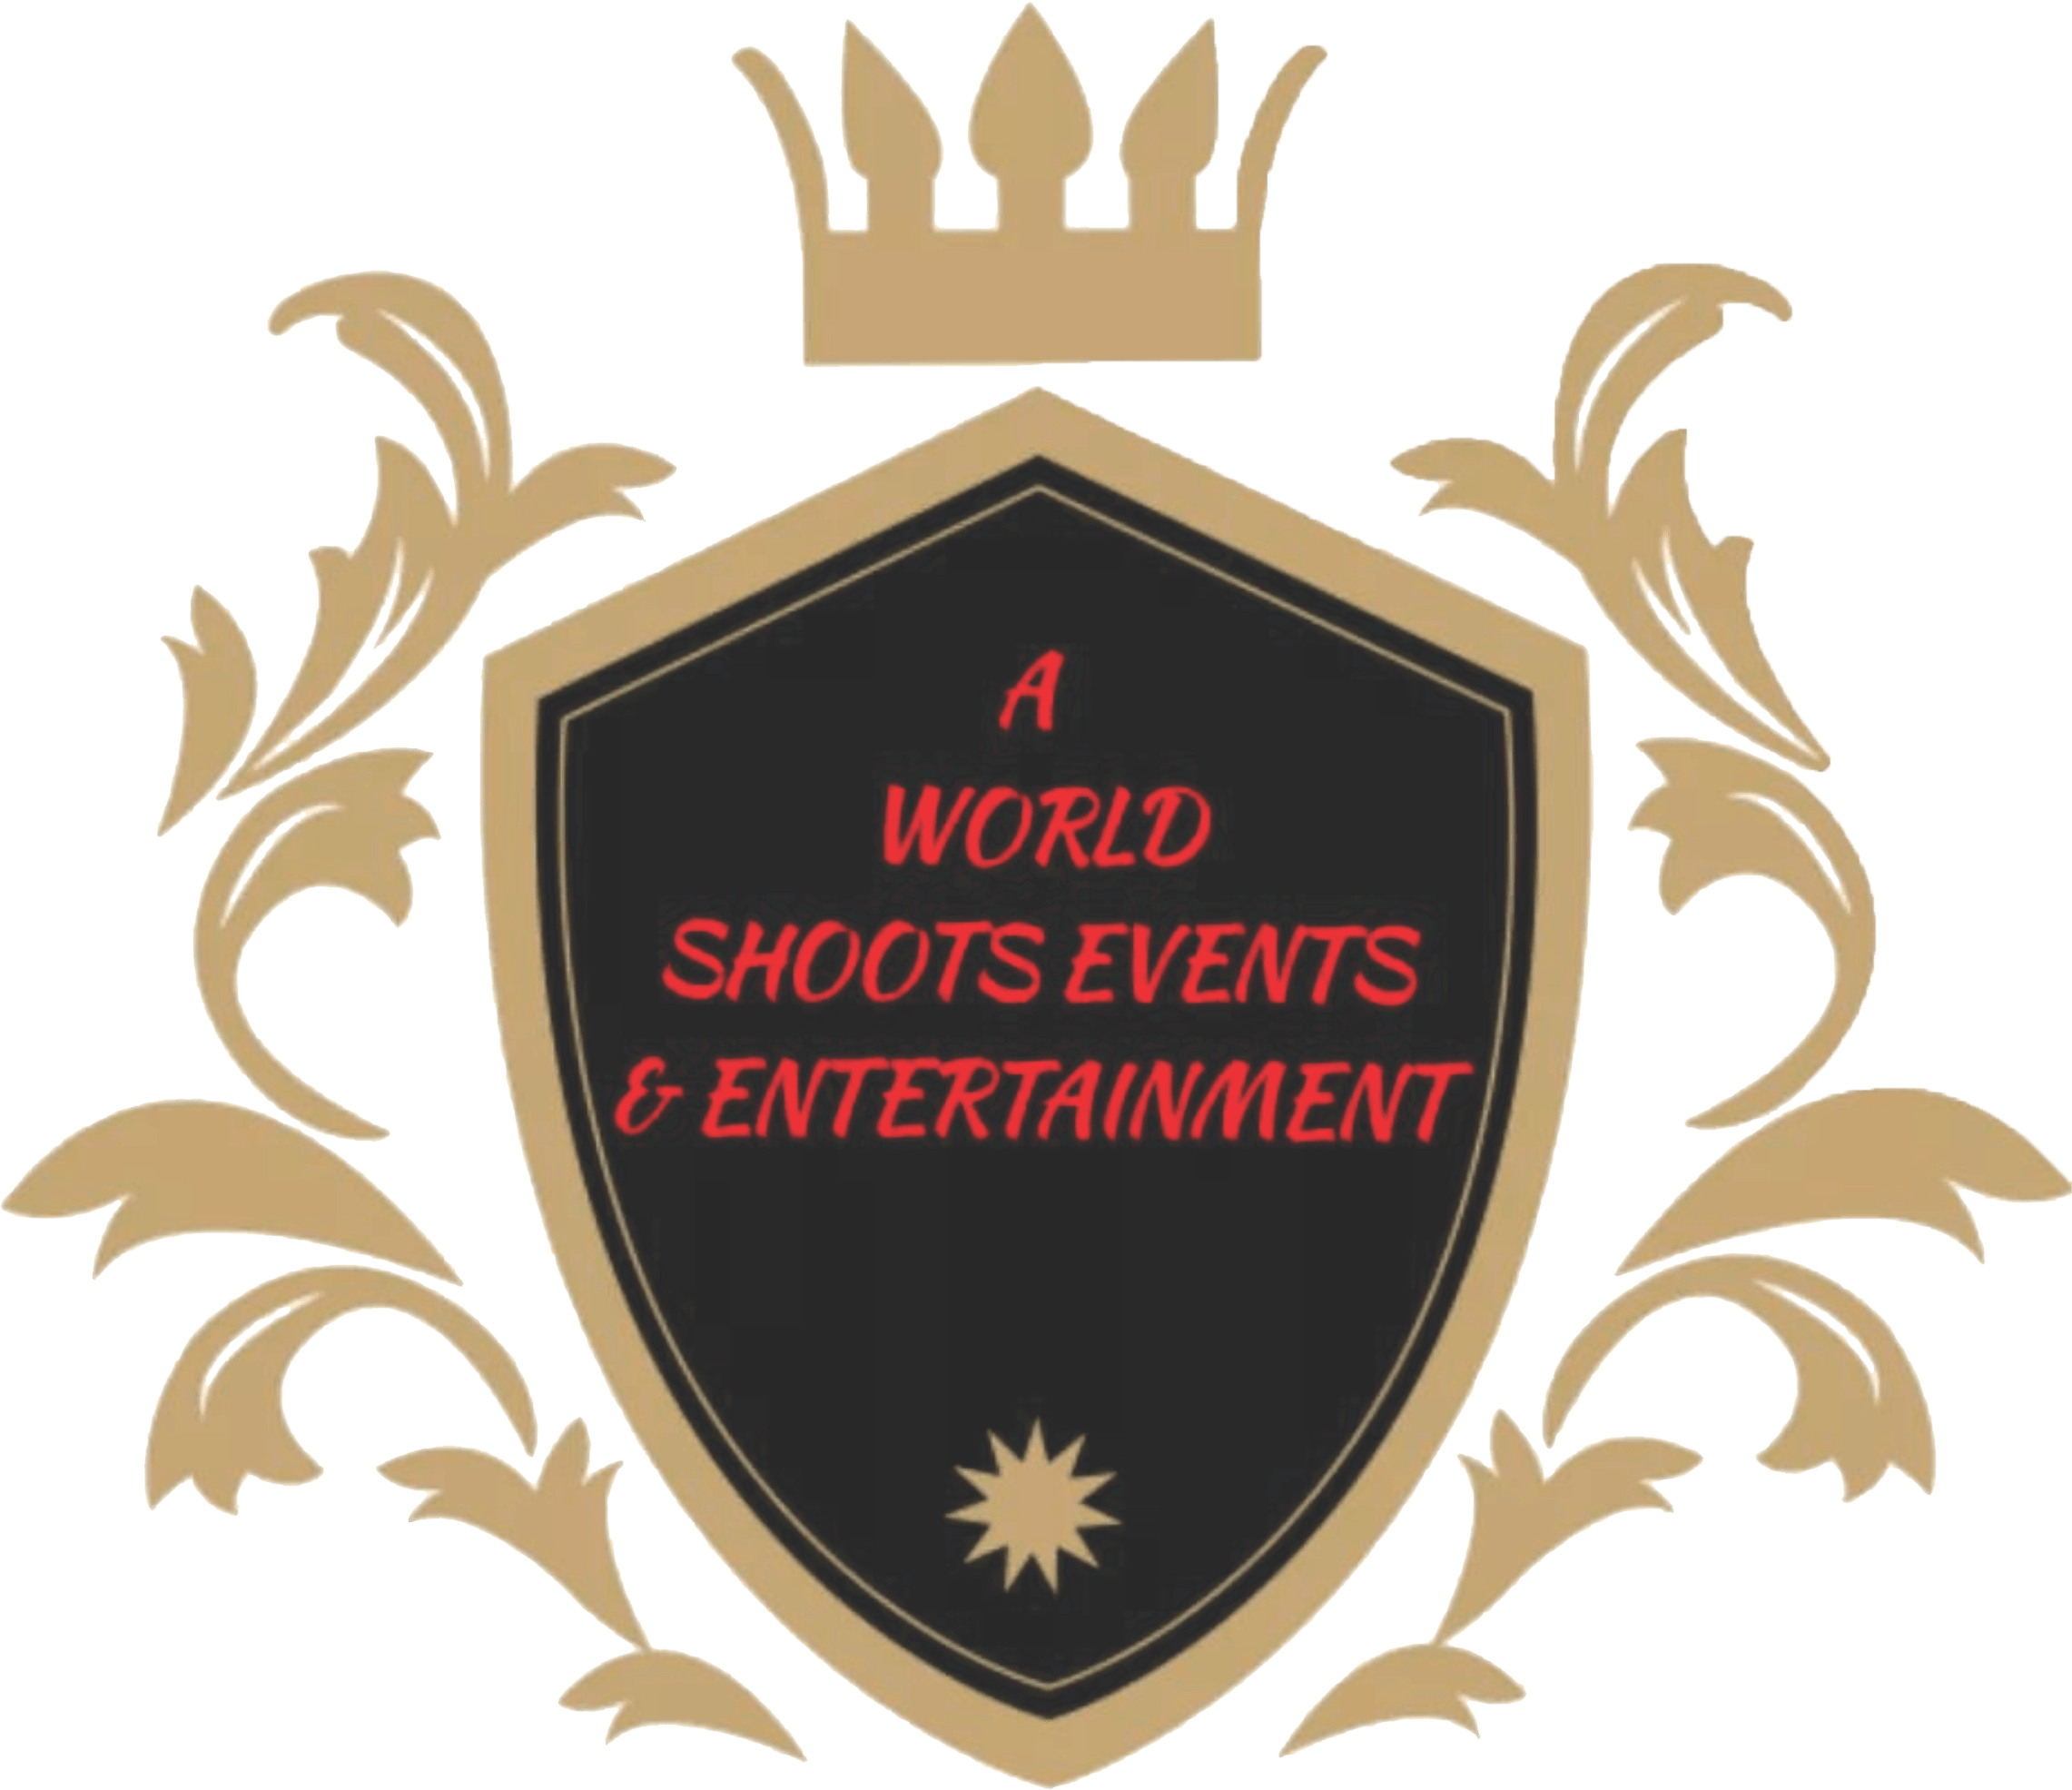 A World Shoots Events & Entertainment